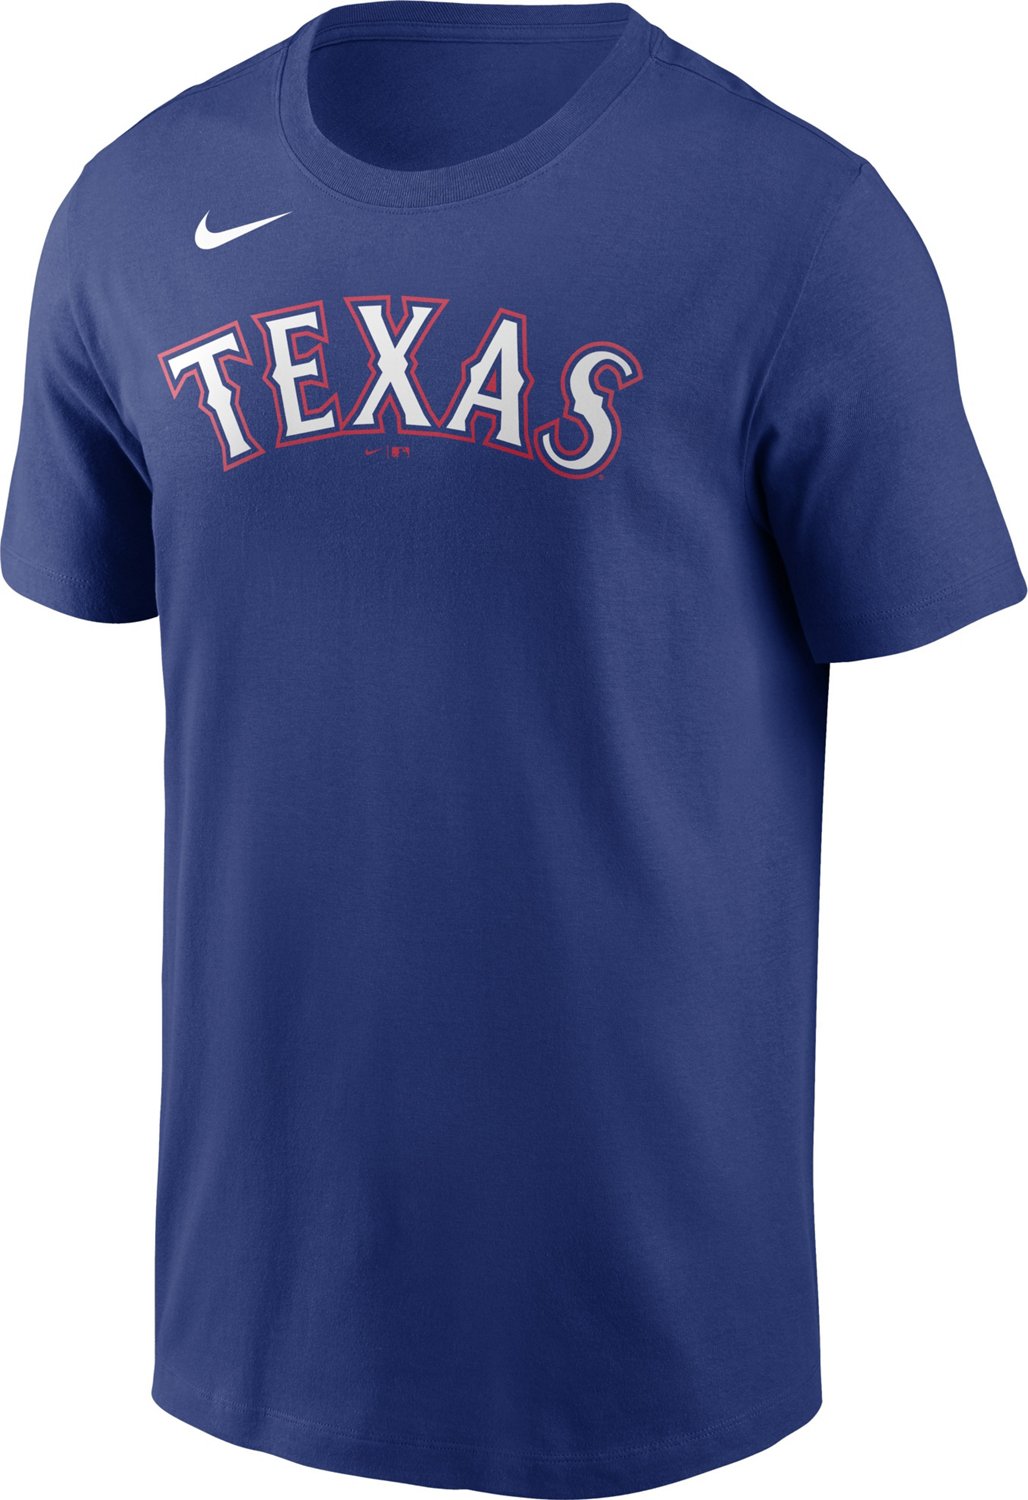 Nike Men's Texas Rangers Wordmark T-Shirt | Academy